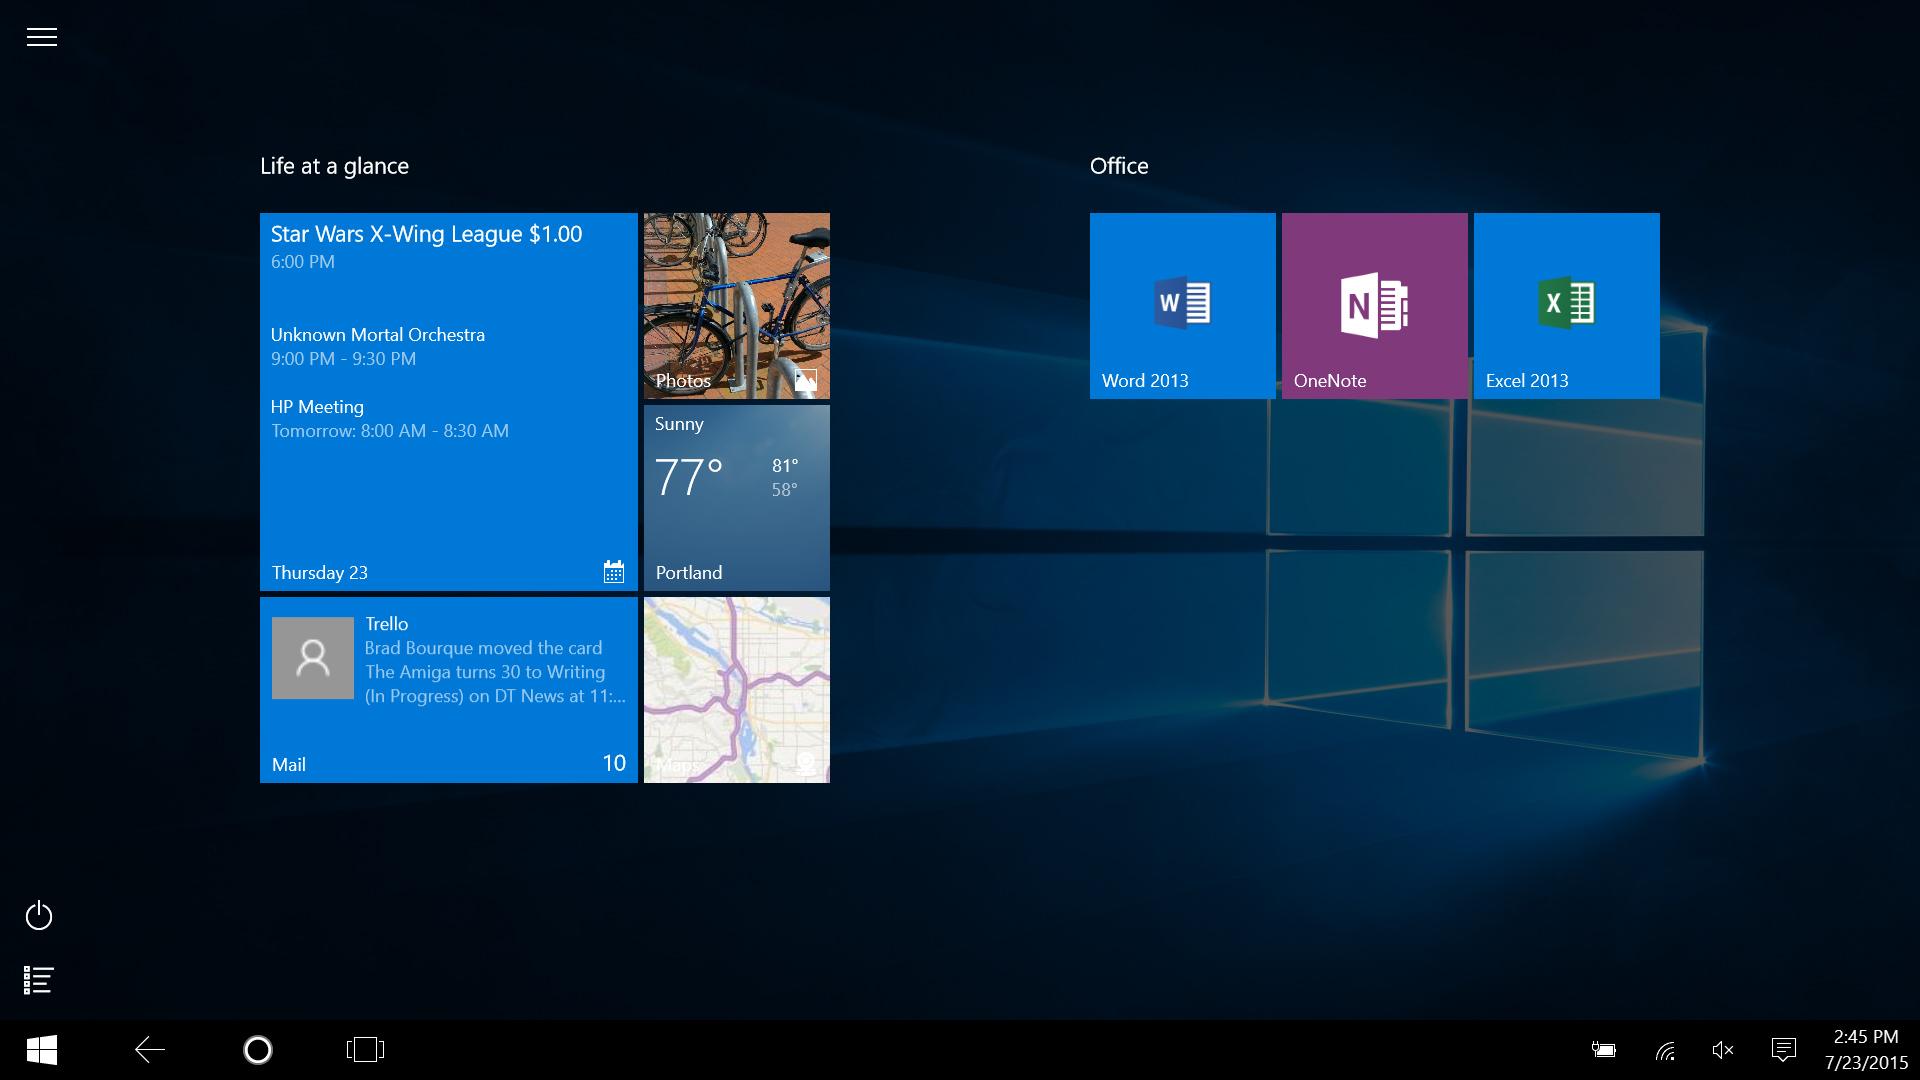 Microsoft Windows 10 Review